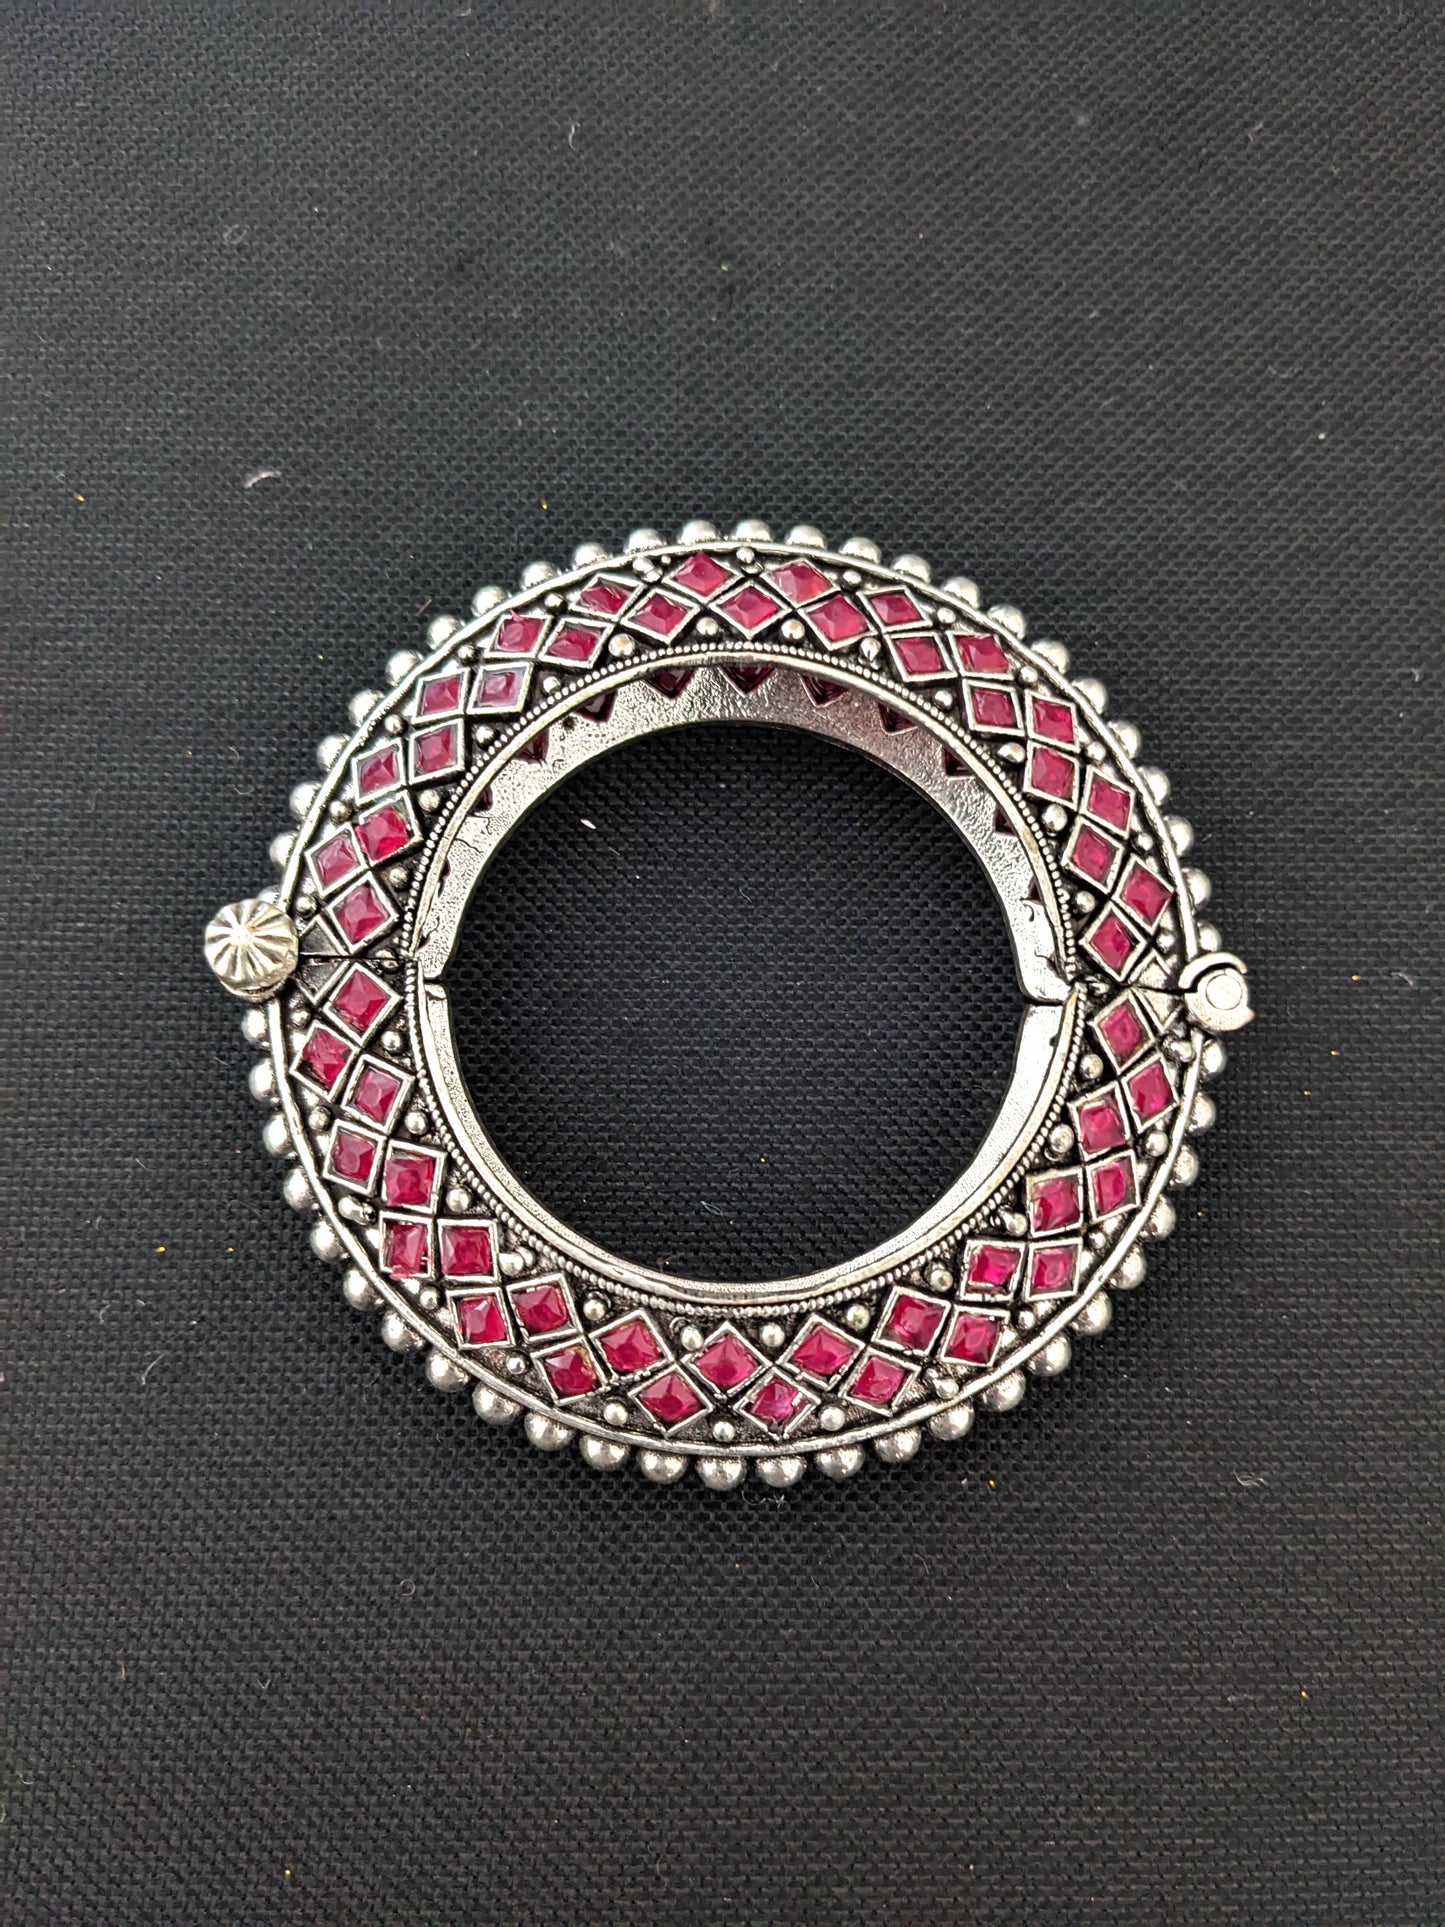 Oxidized Silver Polki stone bangle kada bracelet